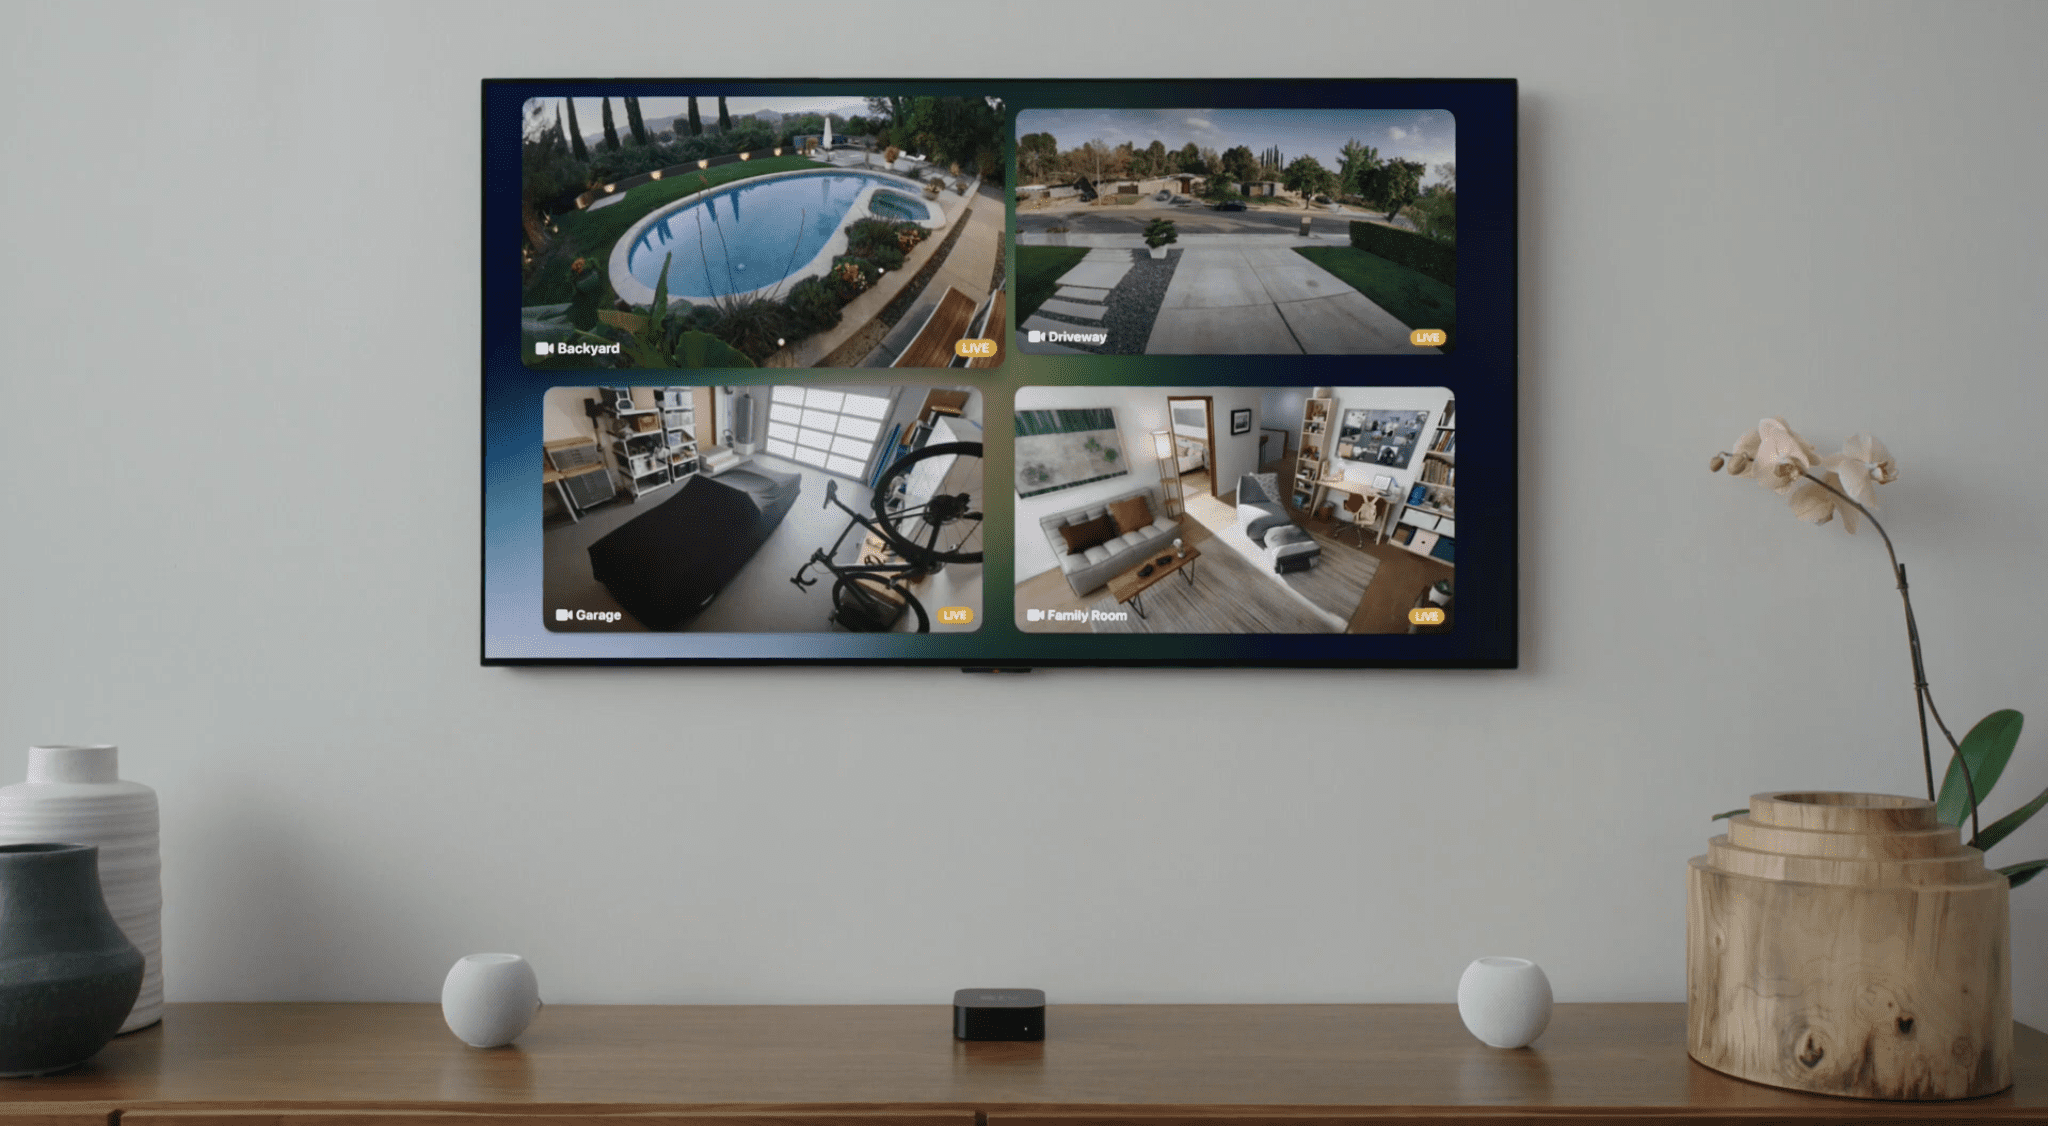 Homekit iOS15 Multi Camera display in Apple TV